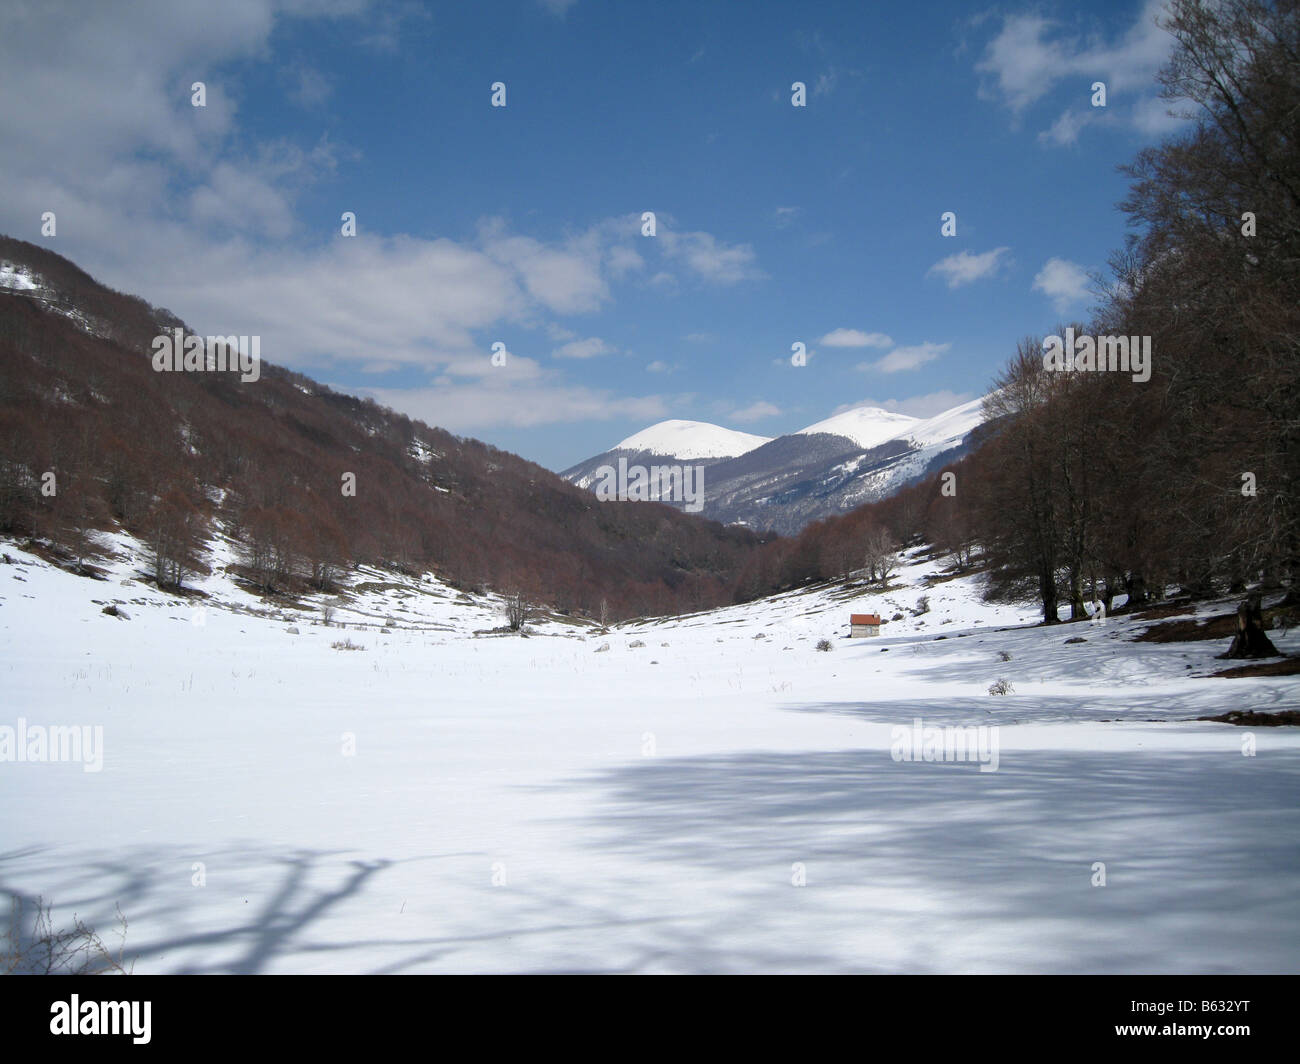 'Valle fredda' valley, BPR, Abruzzo, Italie Banque D'Images